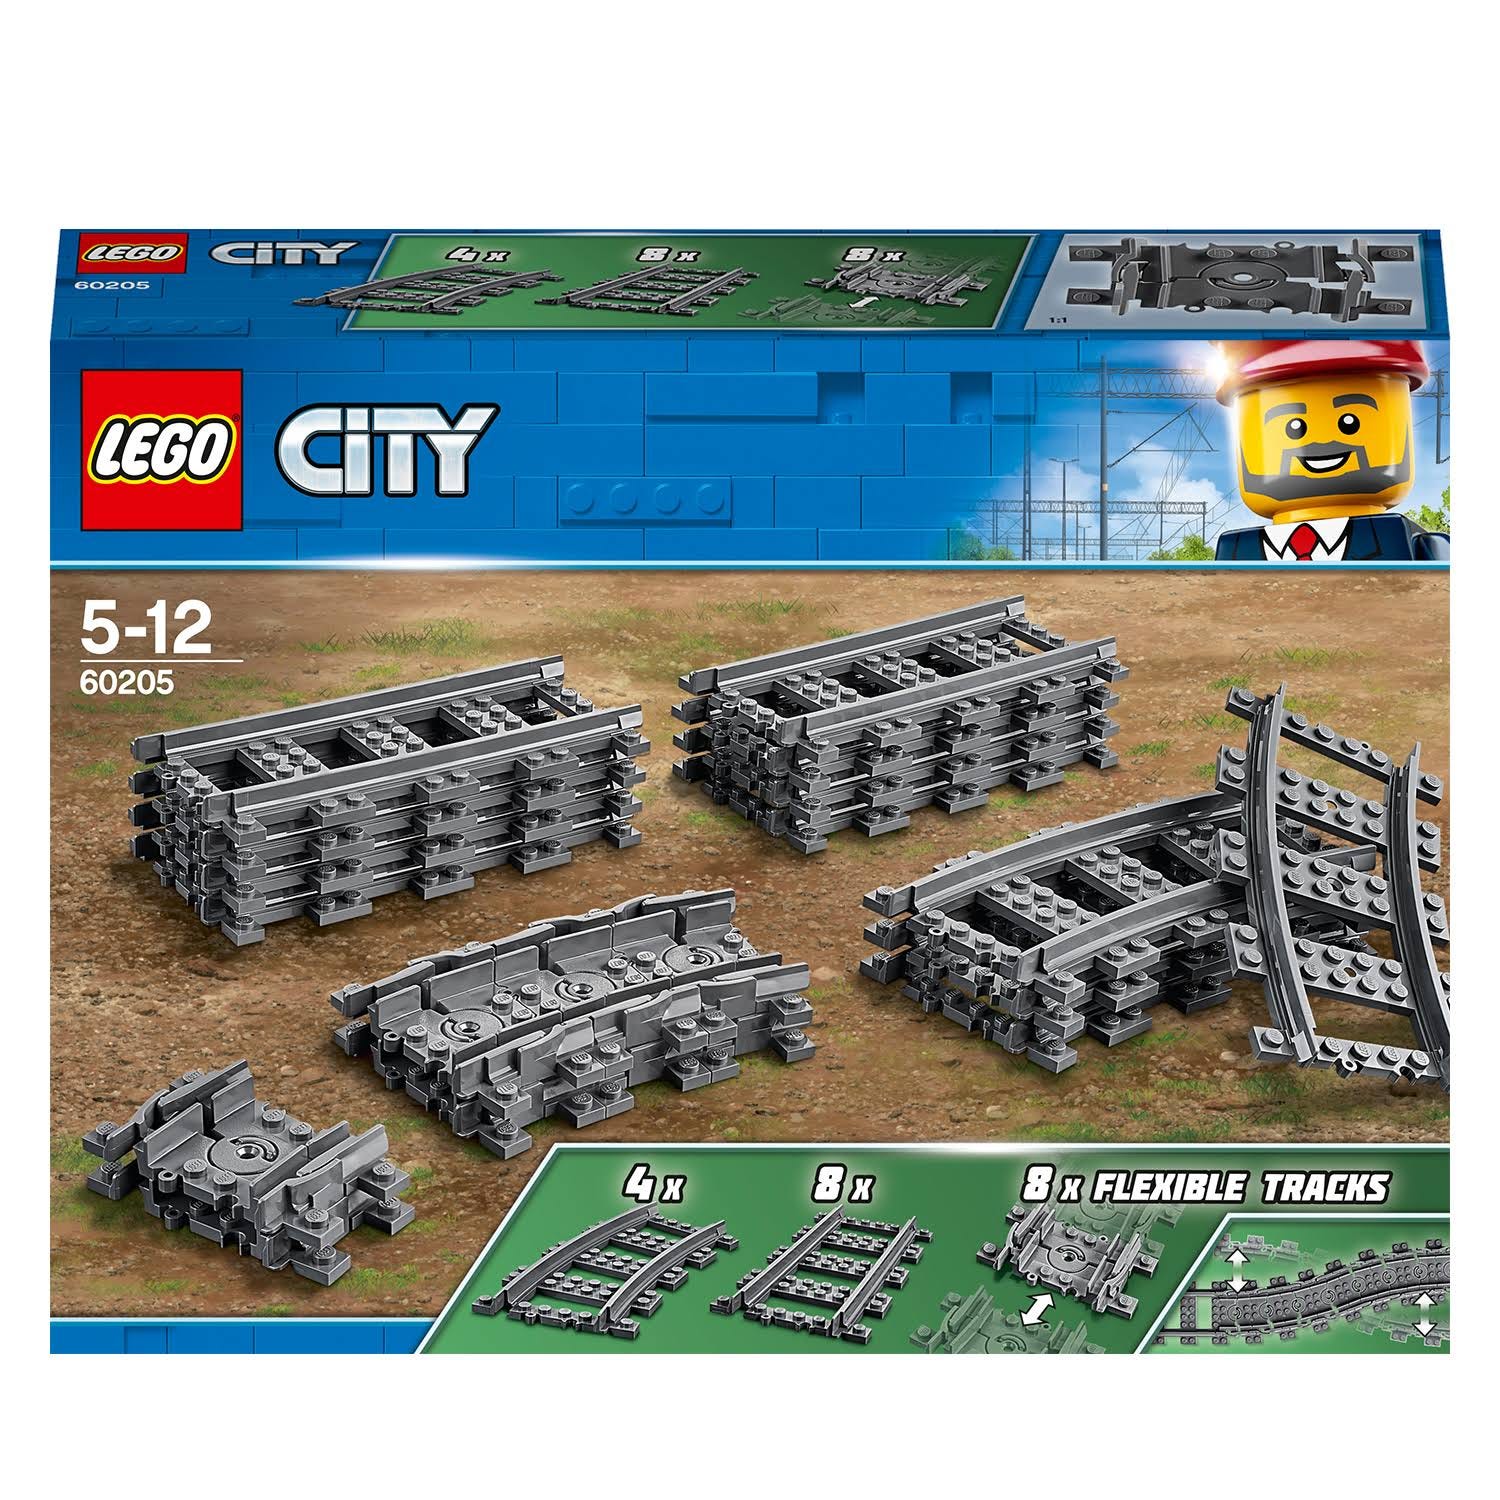 LEGO City Tracks Building Set Expansion Kit - Flexible Tracks for Train Play | Image